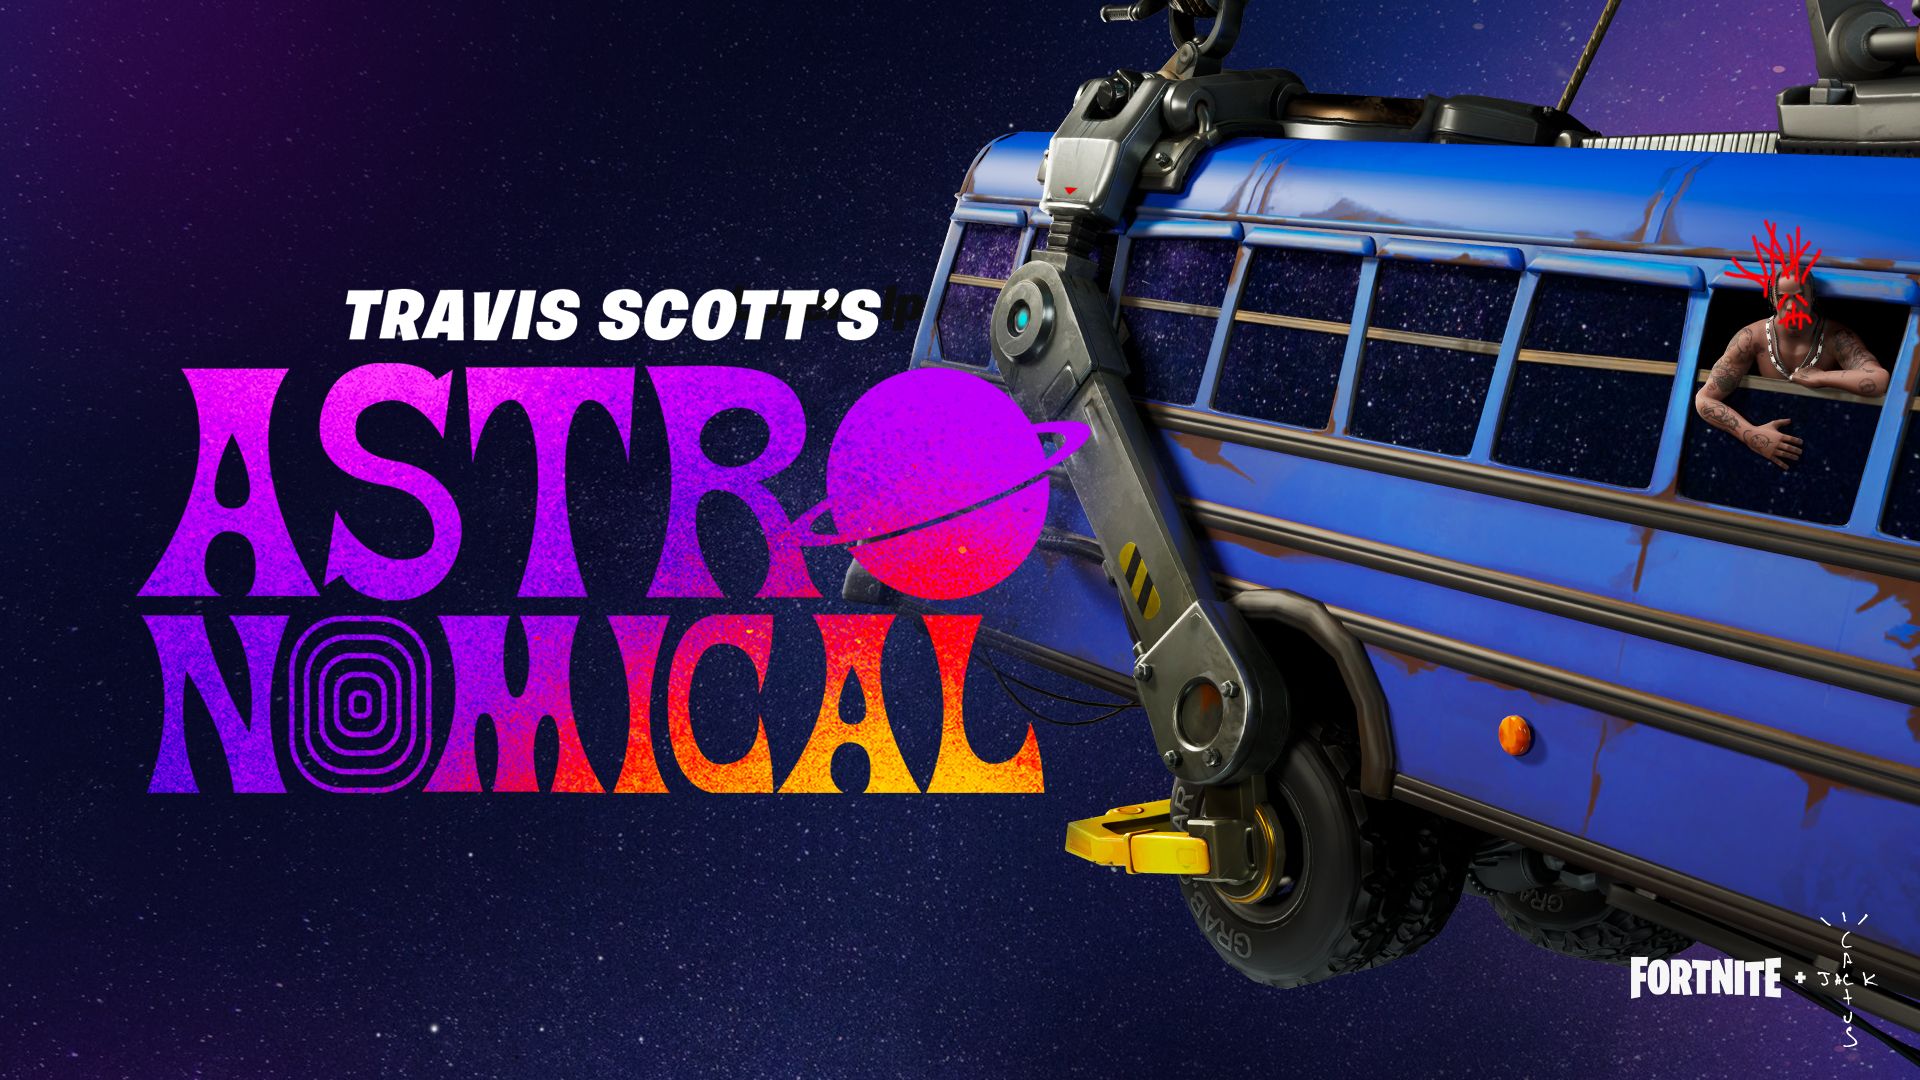 Travis Scott to Premiere New Song on Fortnite